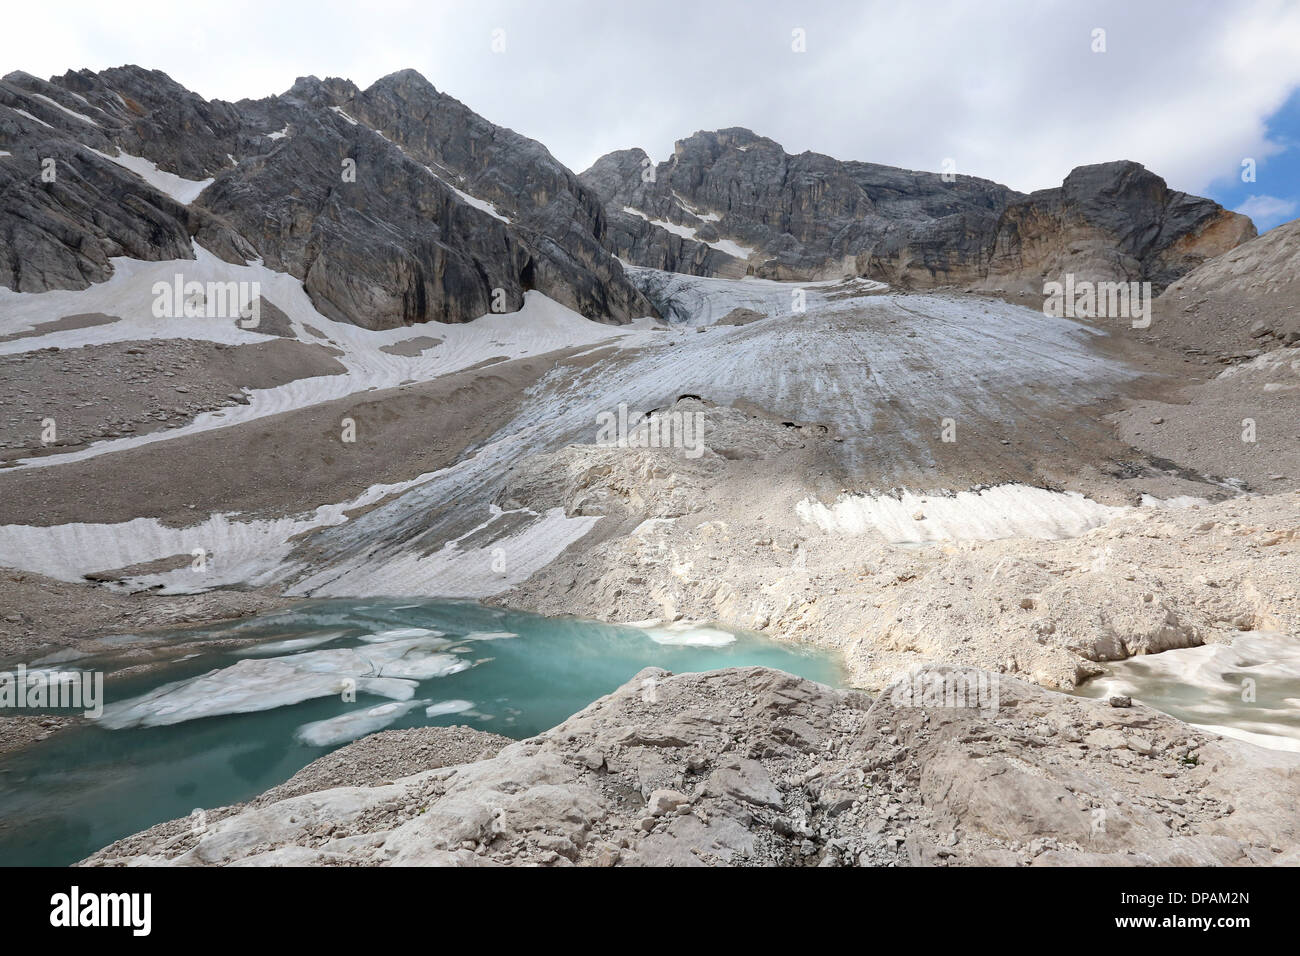 Monte Antelao, view of upper glacier and proglacial lake. Alpine landscape with glaciological aspects. The Dolomites of Cadore. Veneto. Italian Alps. Stock Photo